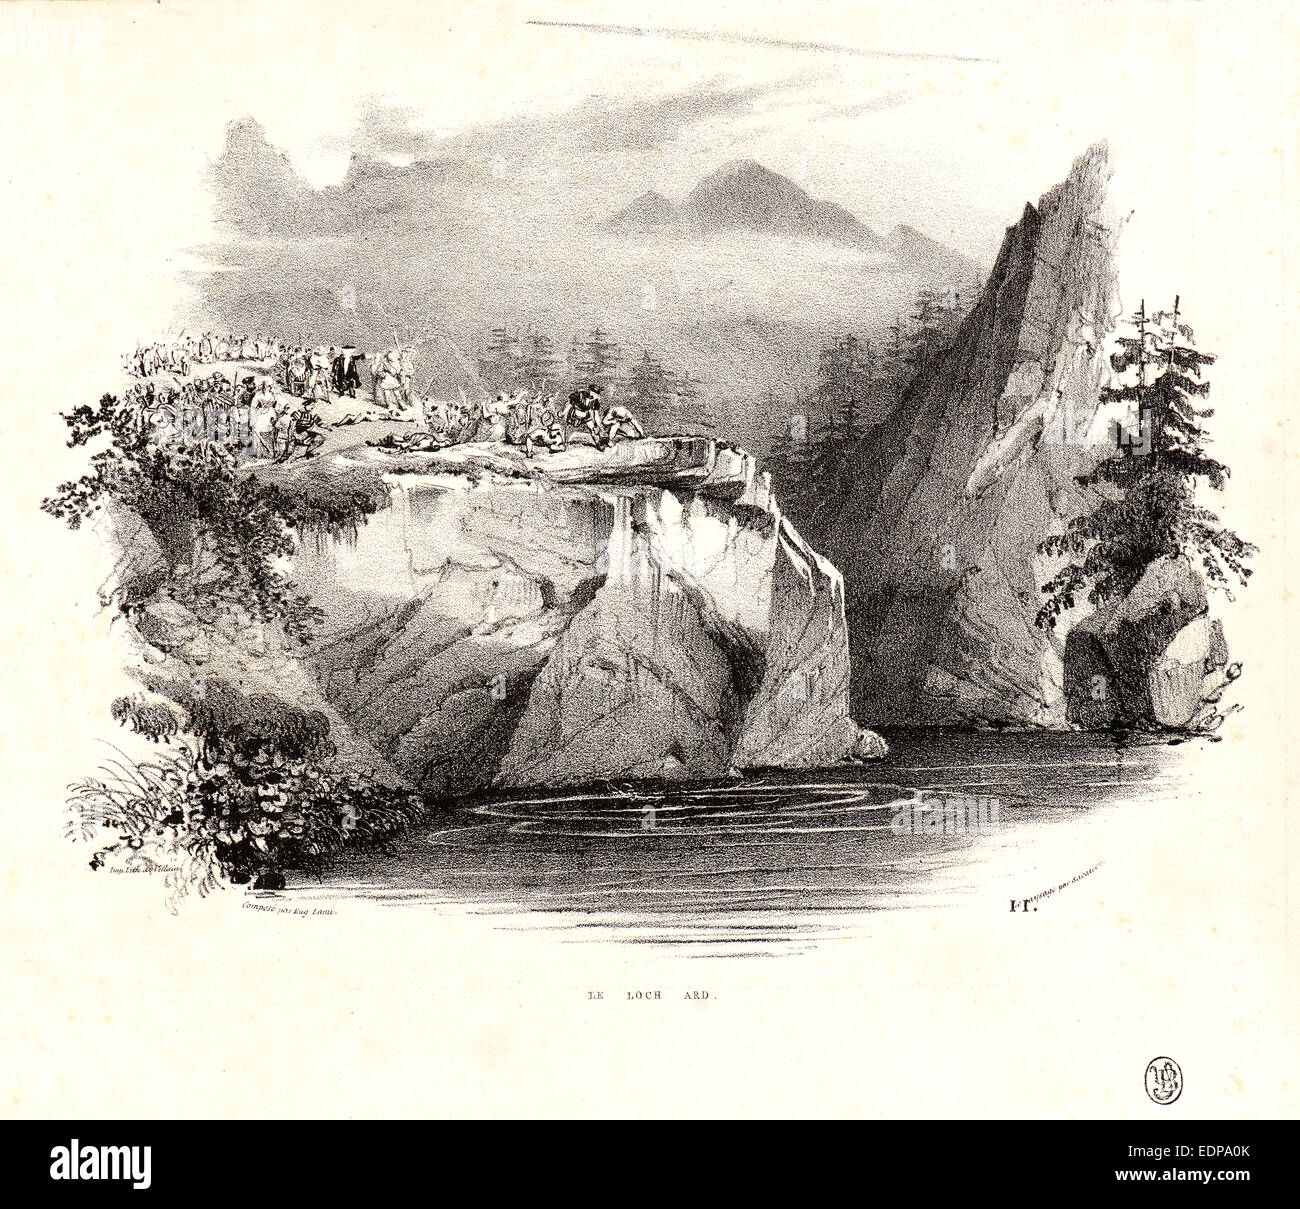 Eugène Louis Lami (French, 1800 - 1890). Le Loch Ard, 1821. Lithograph Stock Photo